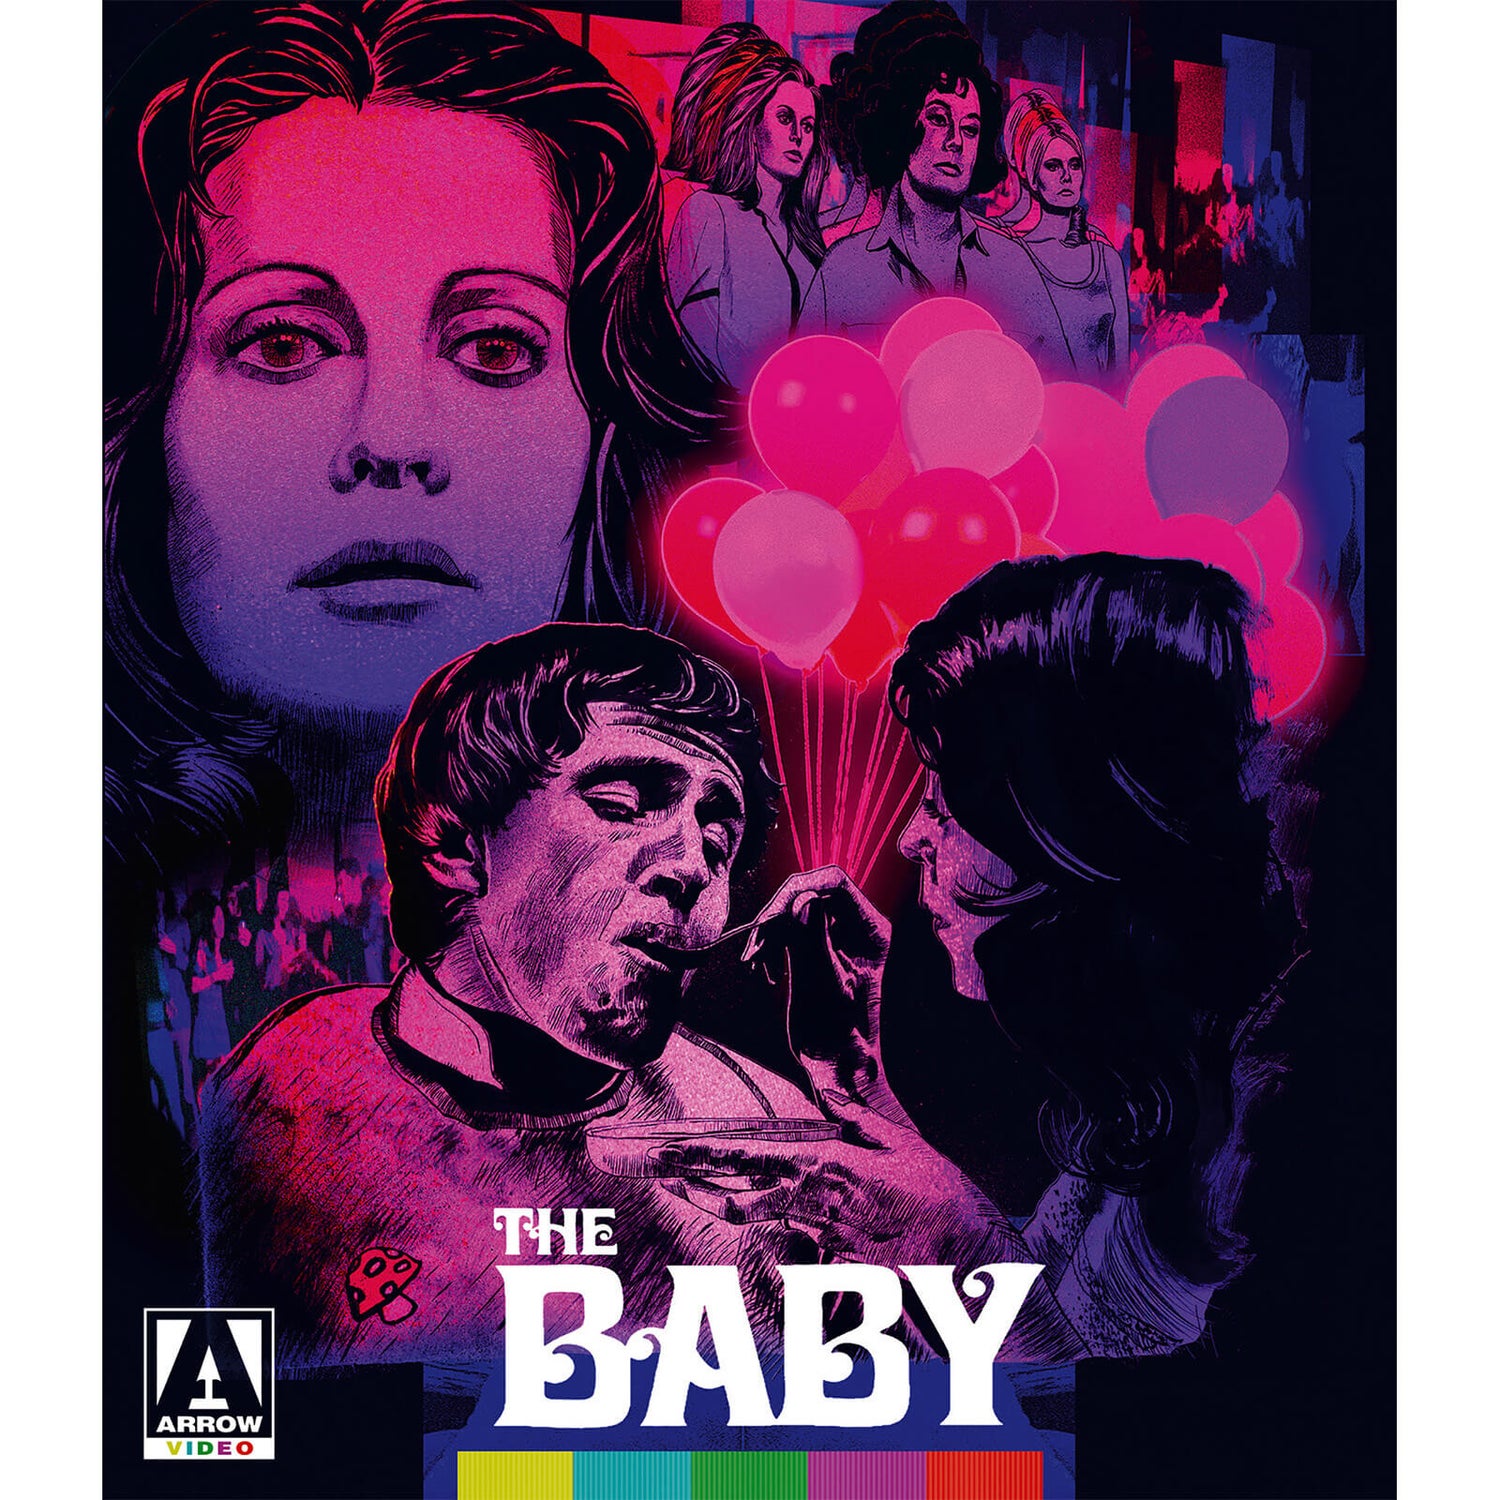 The Baby Blu-ray